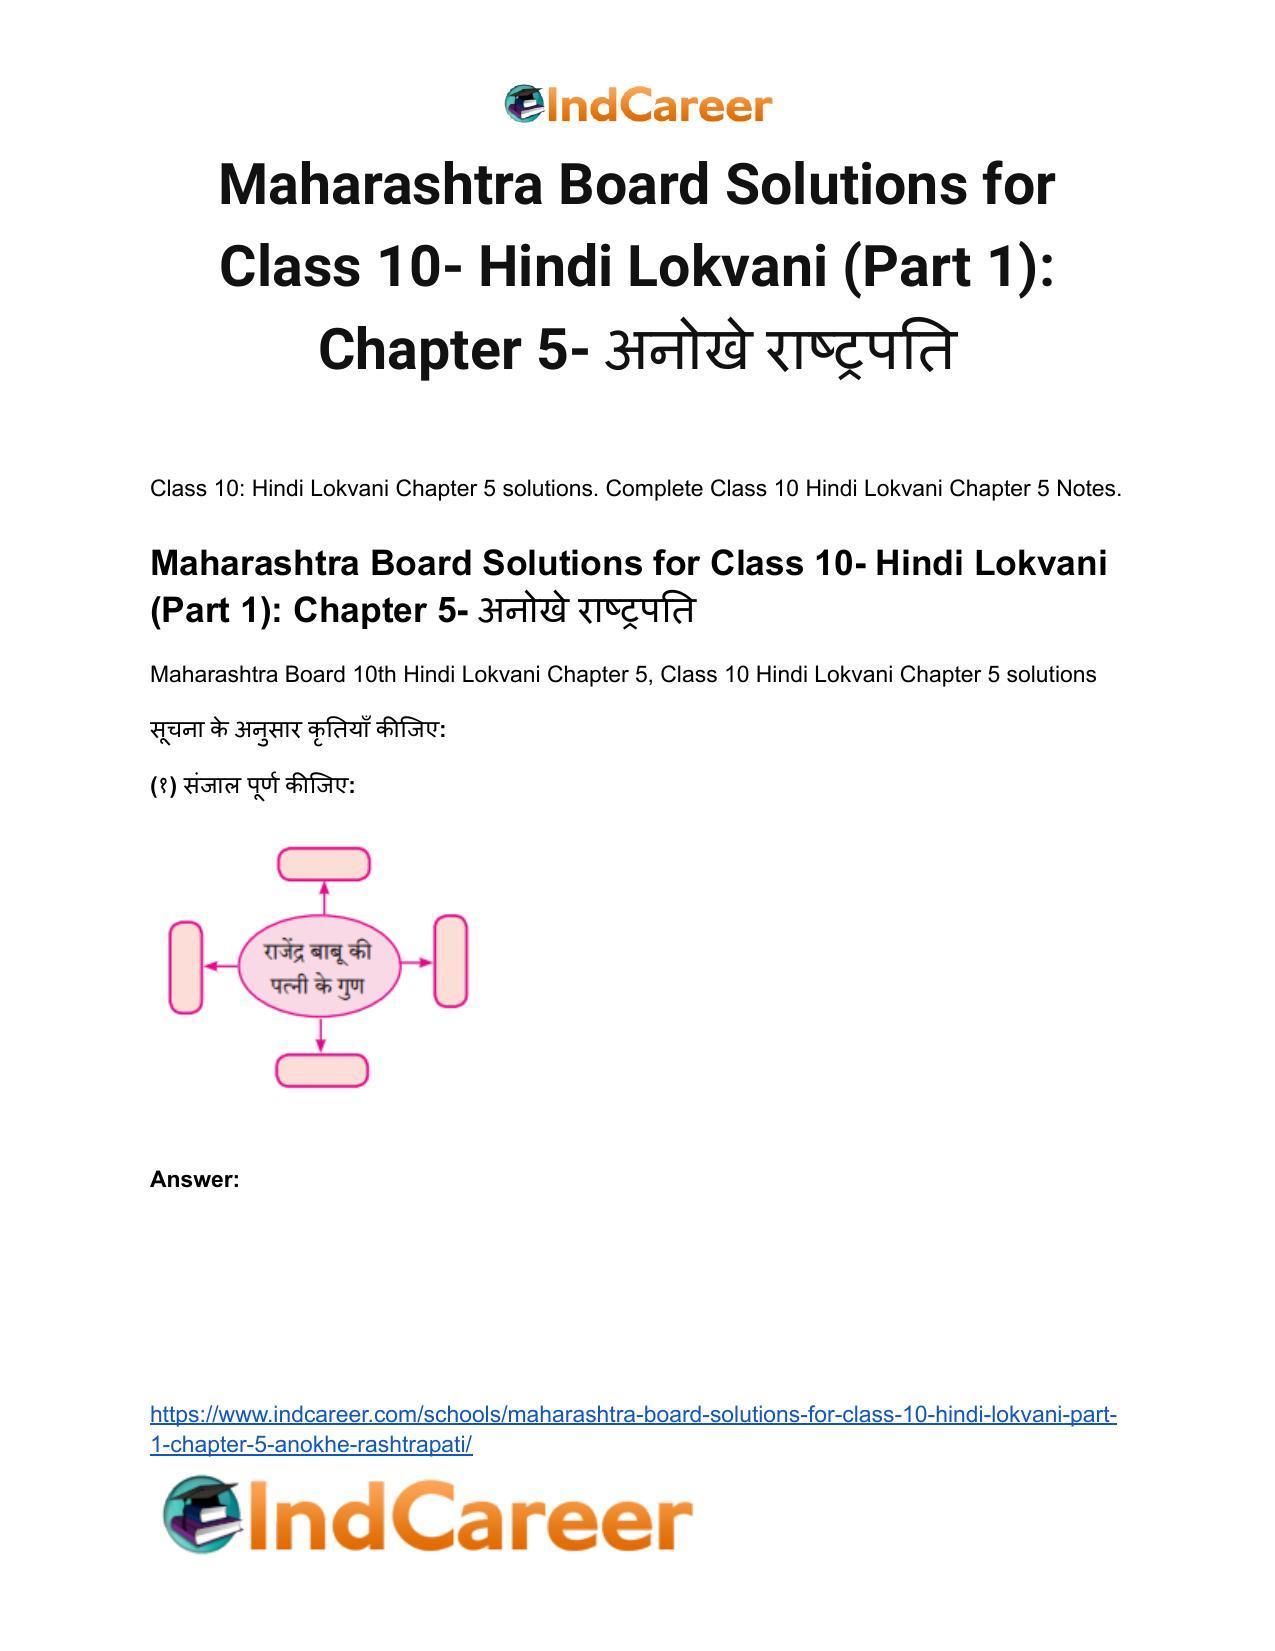 Maharashtra Board Solutions for Class 10- Hindi Lokvani (Part 1): Chapter 5- अनोखे राष्ट्रपति - Page 2